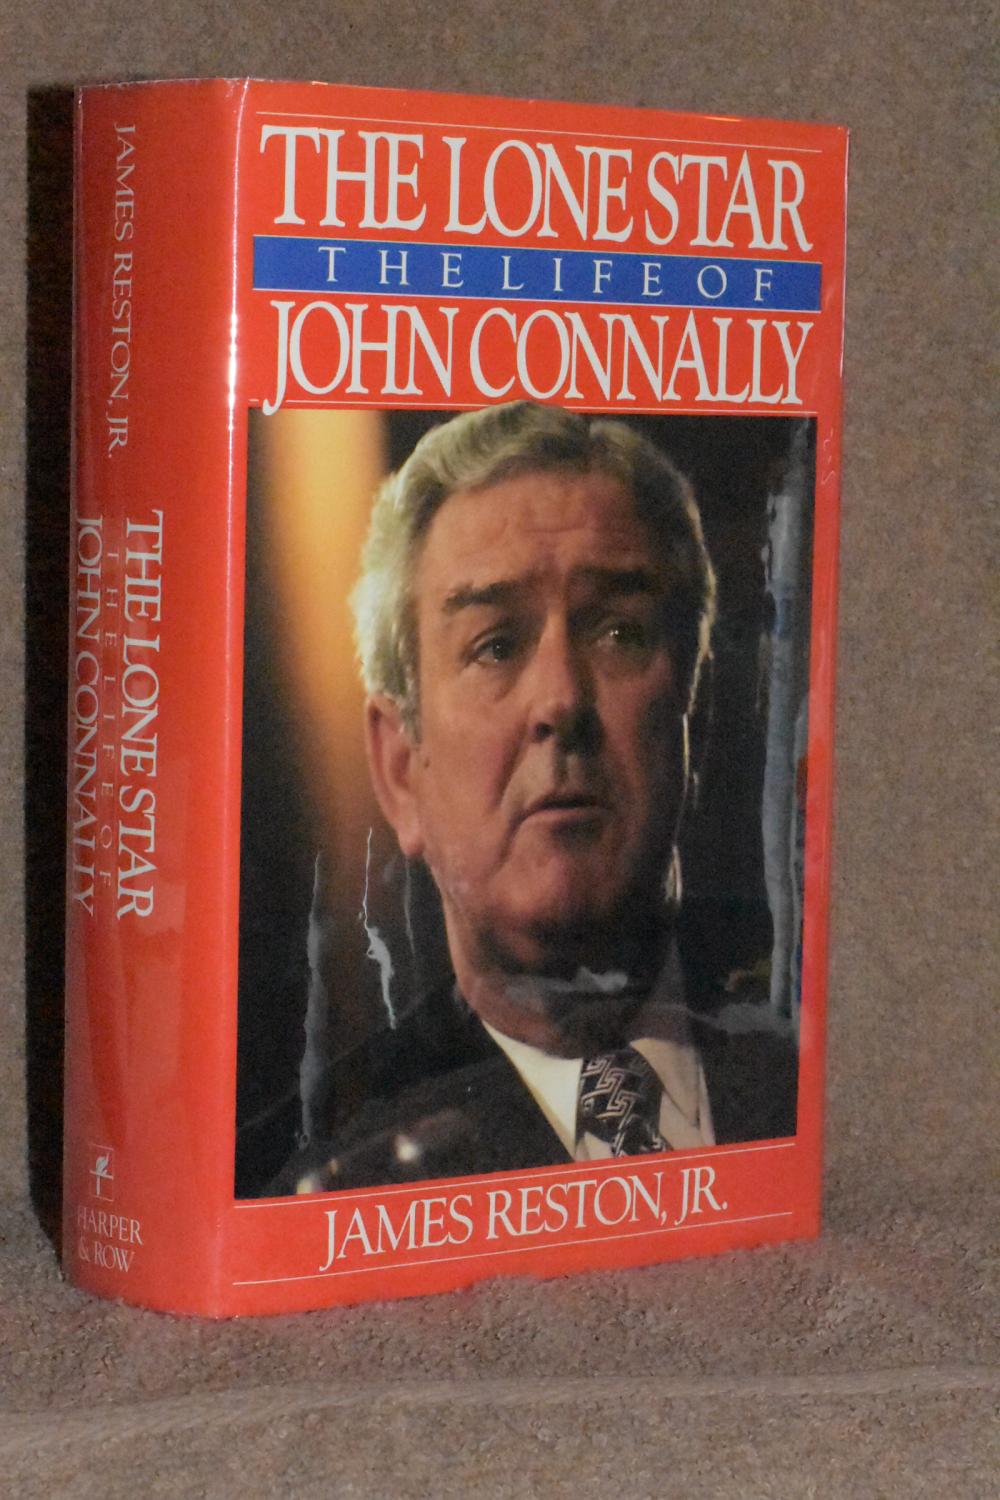 The Lone Star; The Life of John Connally - James Reston, Jr.